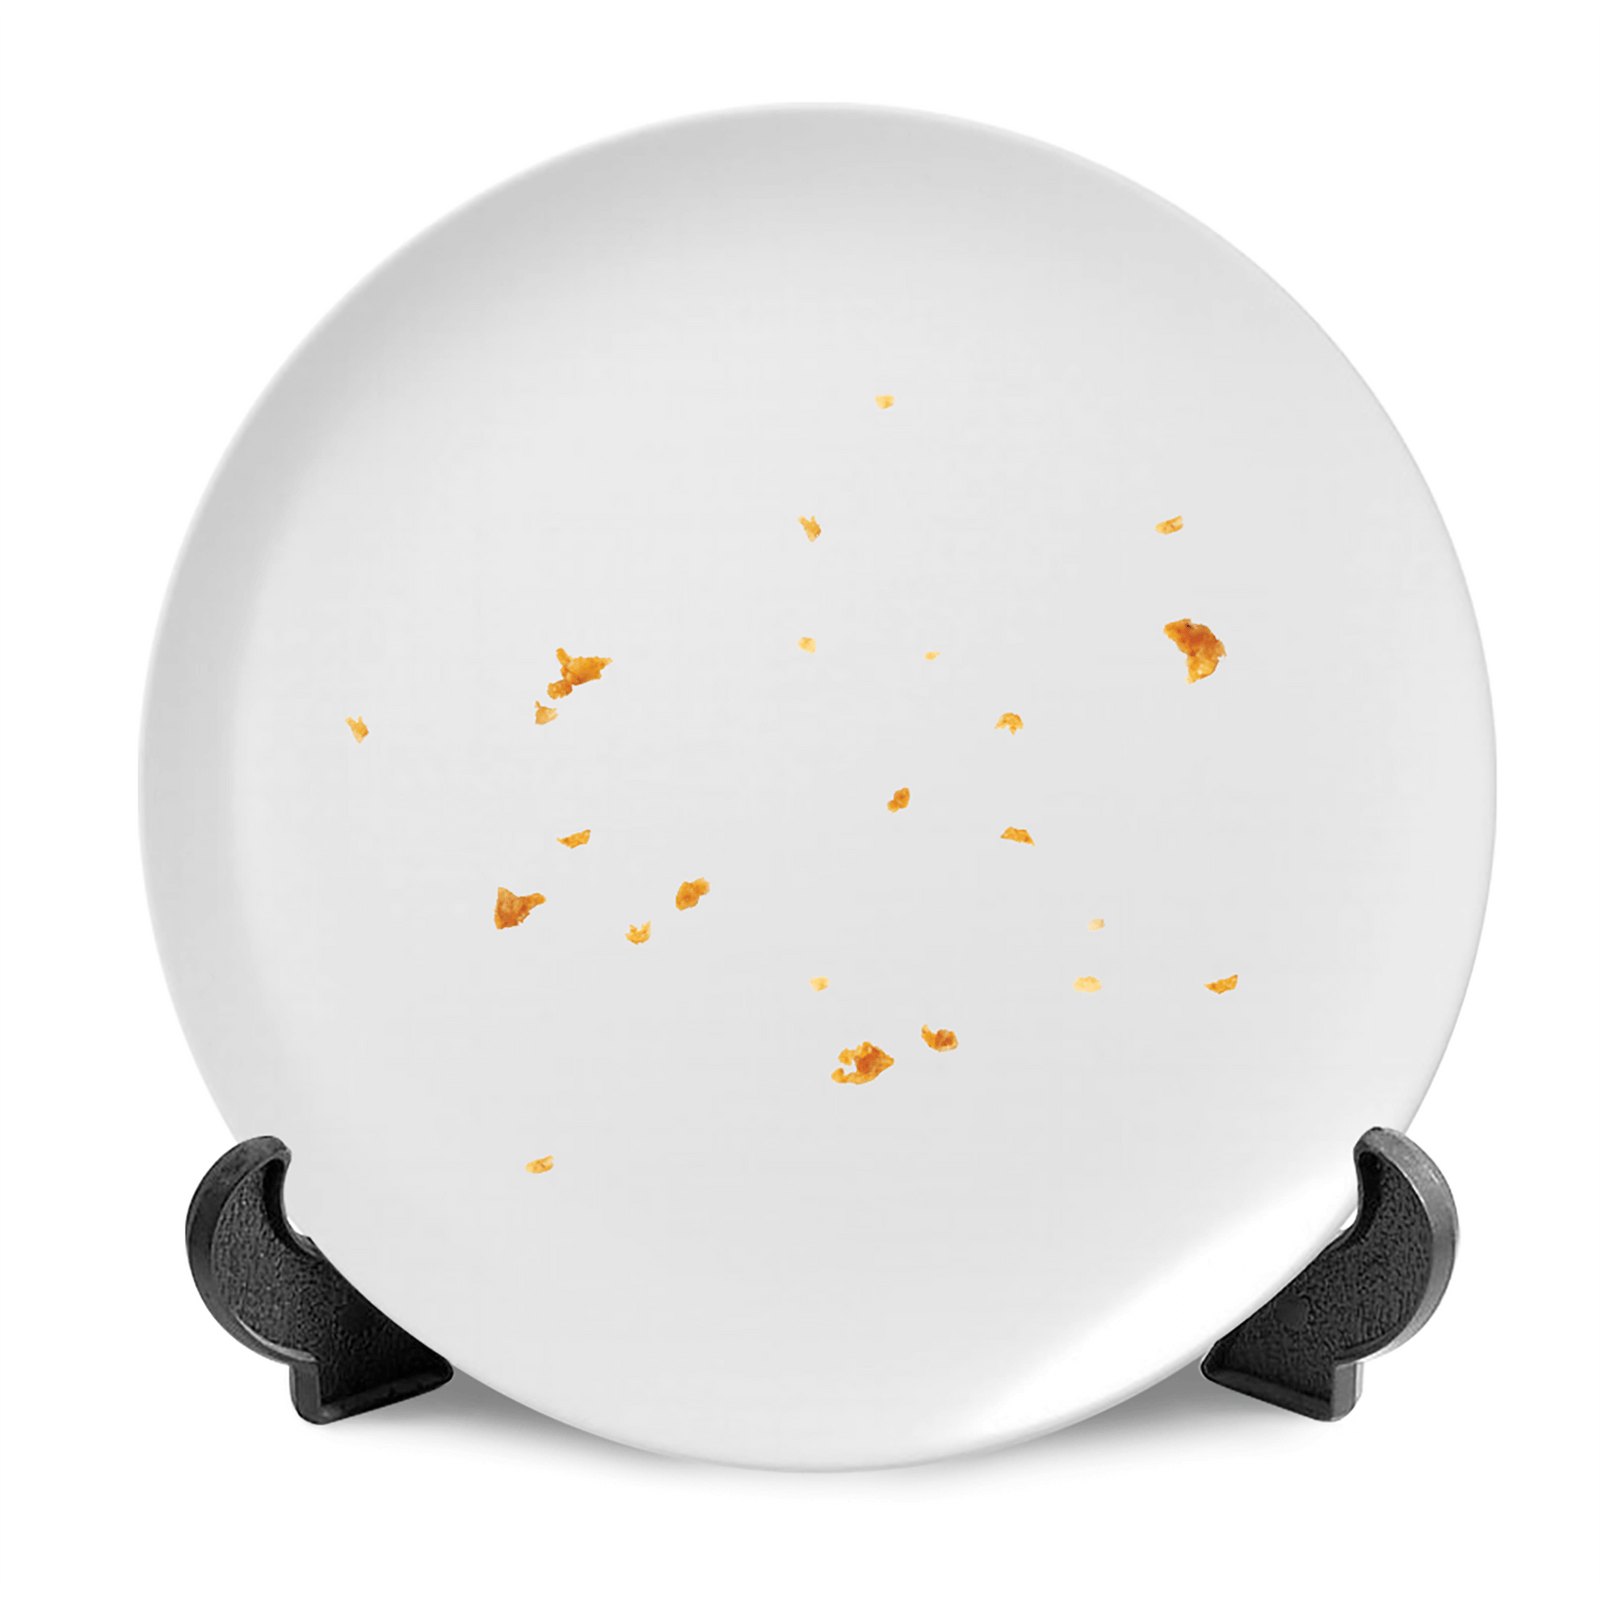 Kentucky Fried Crumbs Commemorative Plate